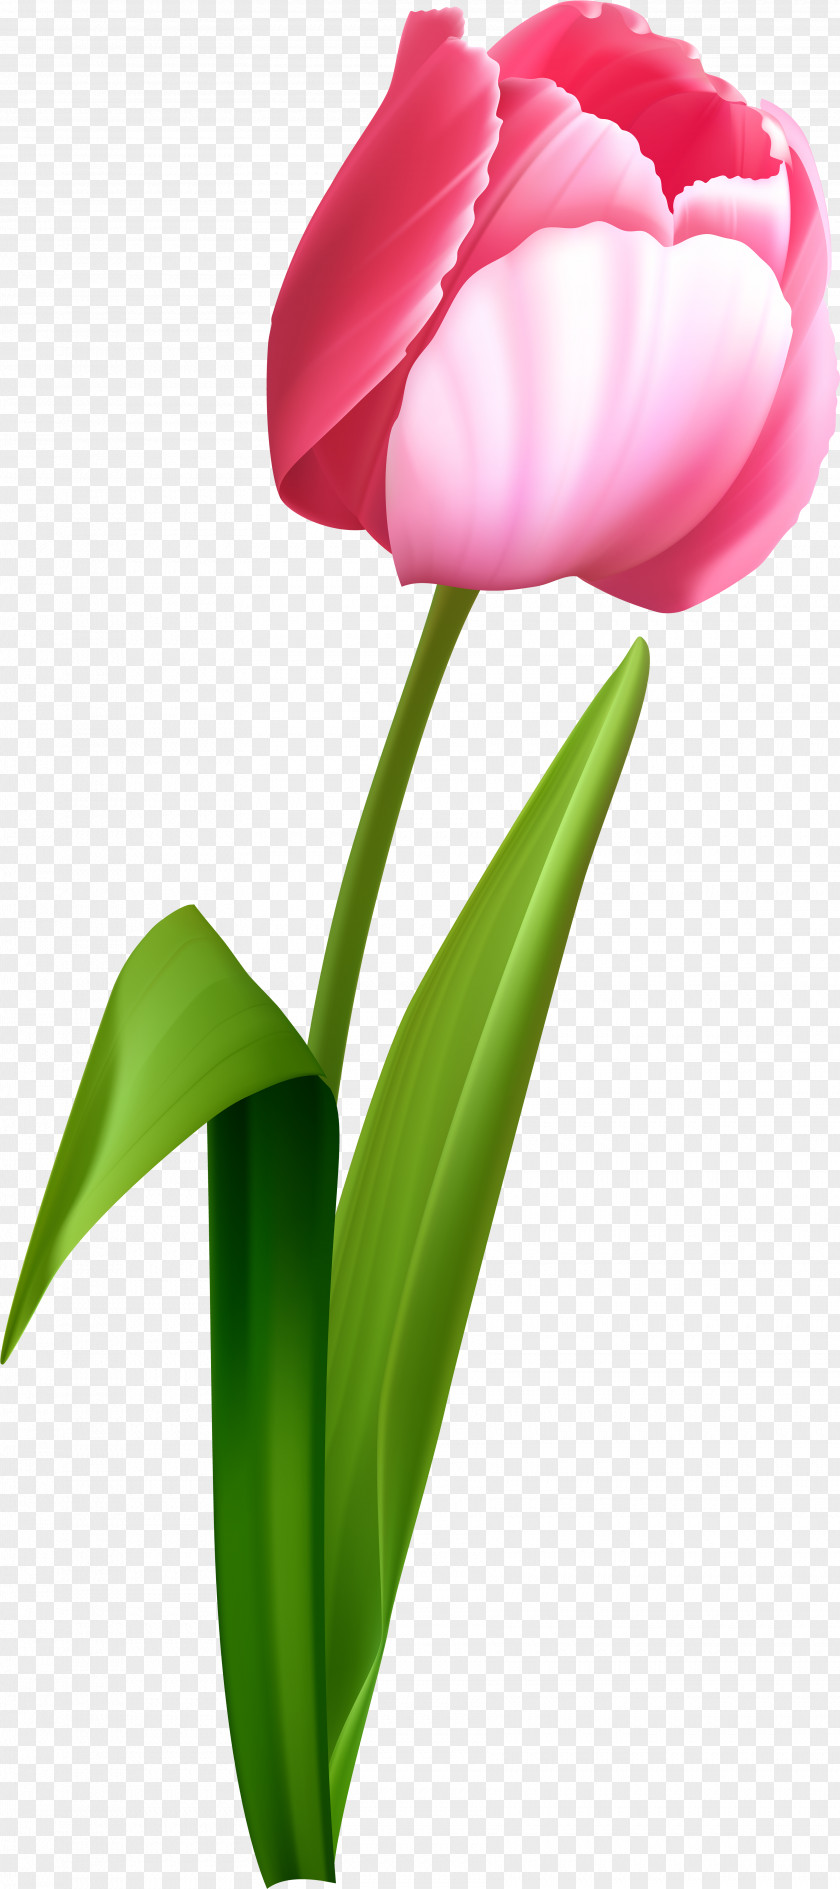 Spring Clip Art Tulips Tulip Transparency Desktop Wallpaper PNG